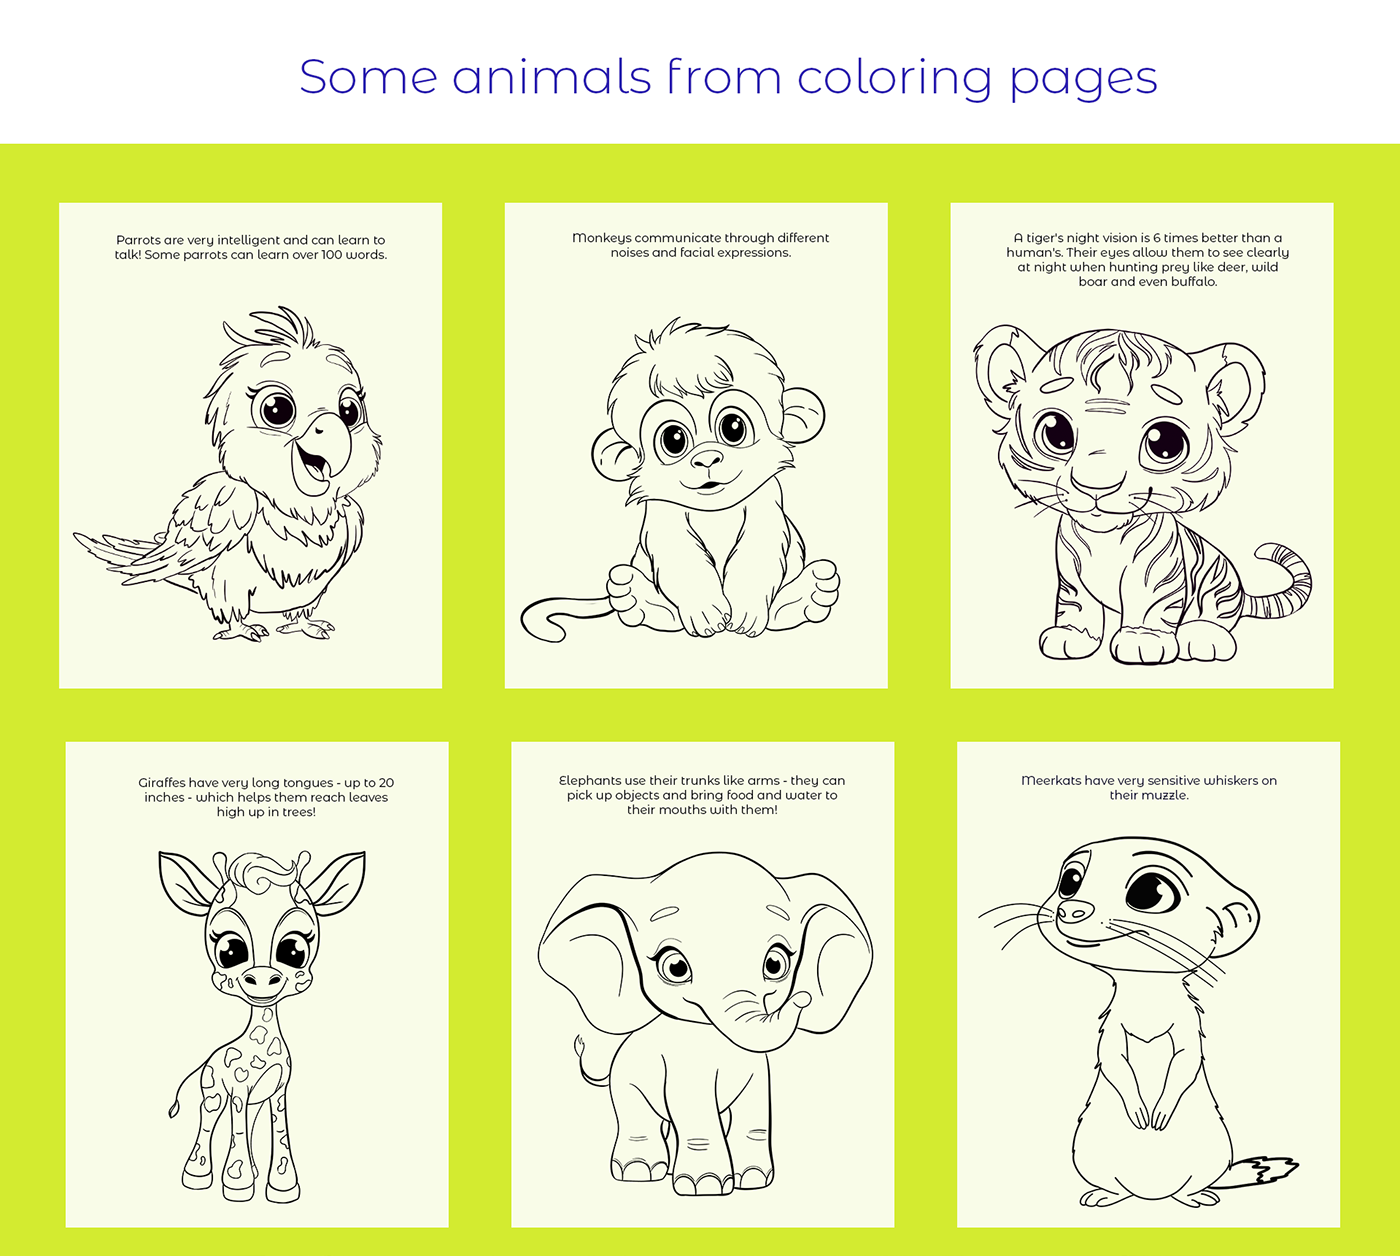 coloring book cover design Character design  children's book children illustration Picture book animals kids children